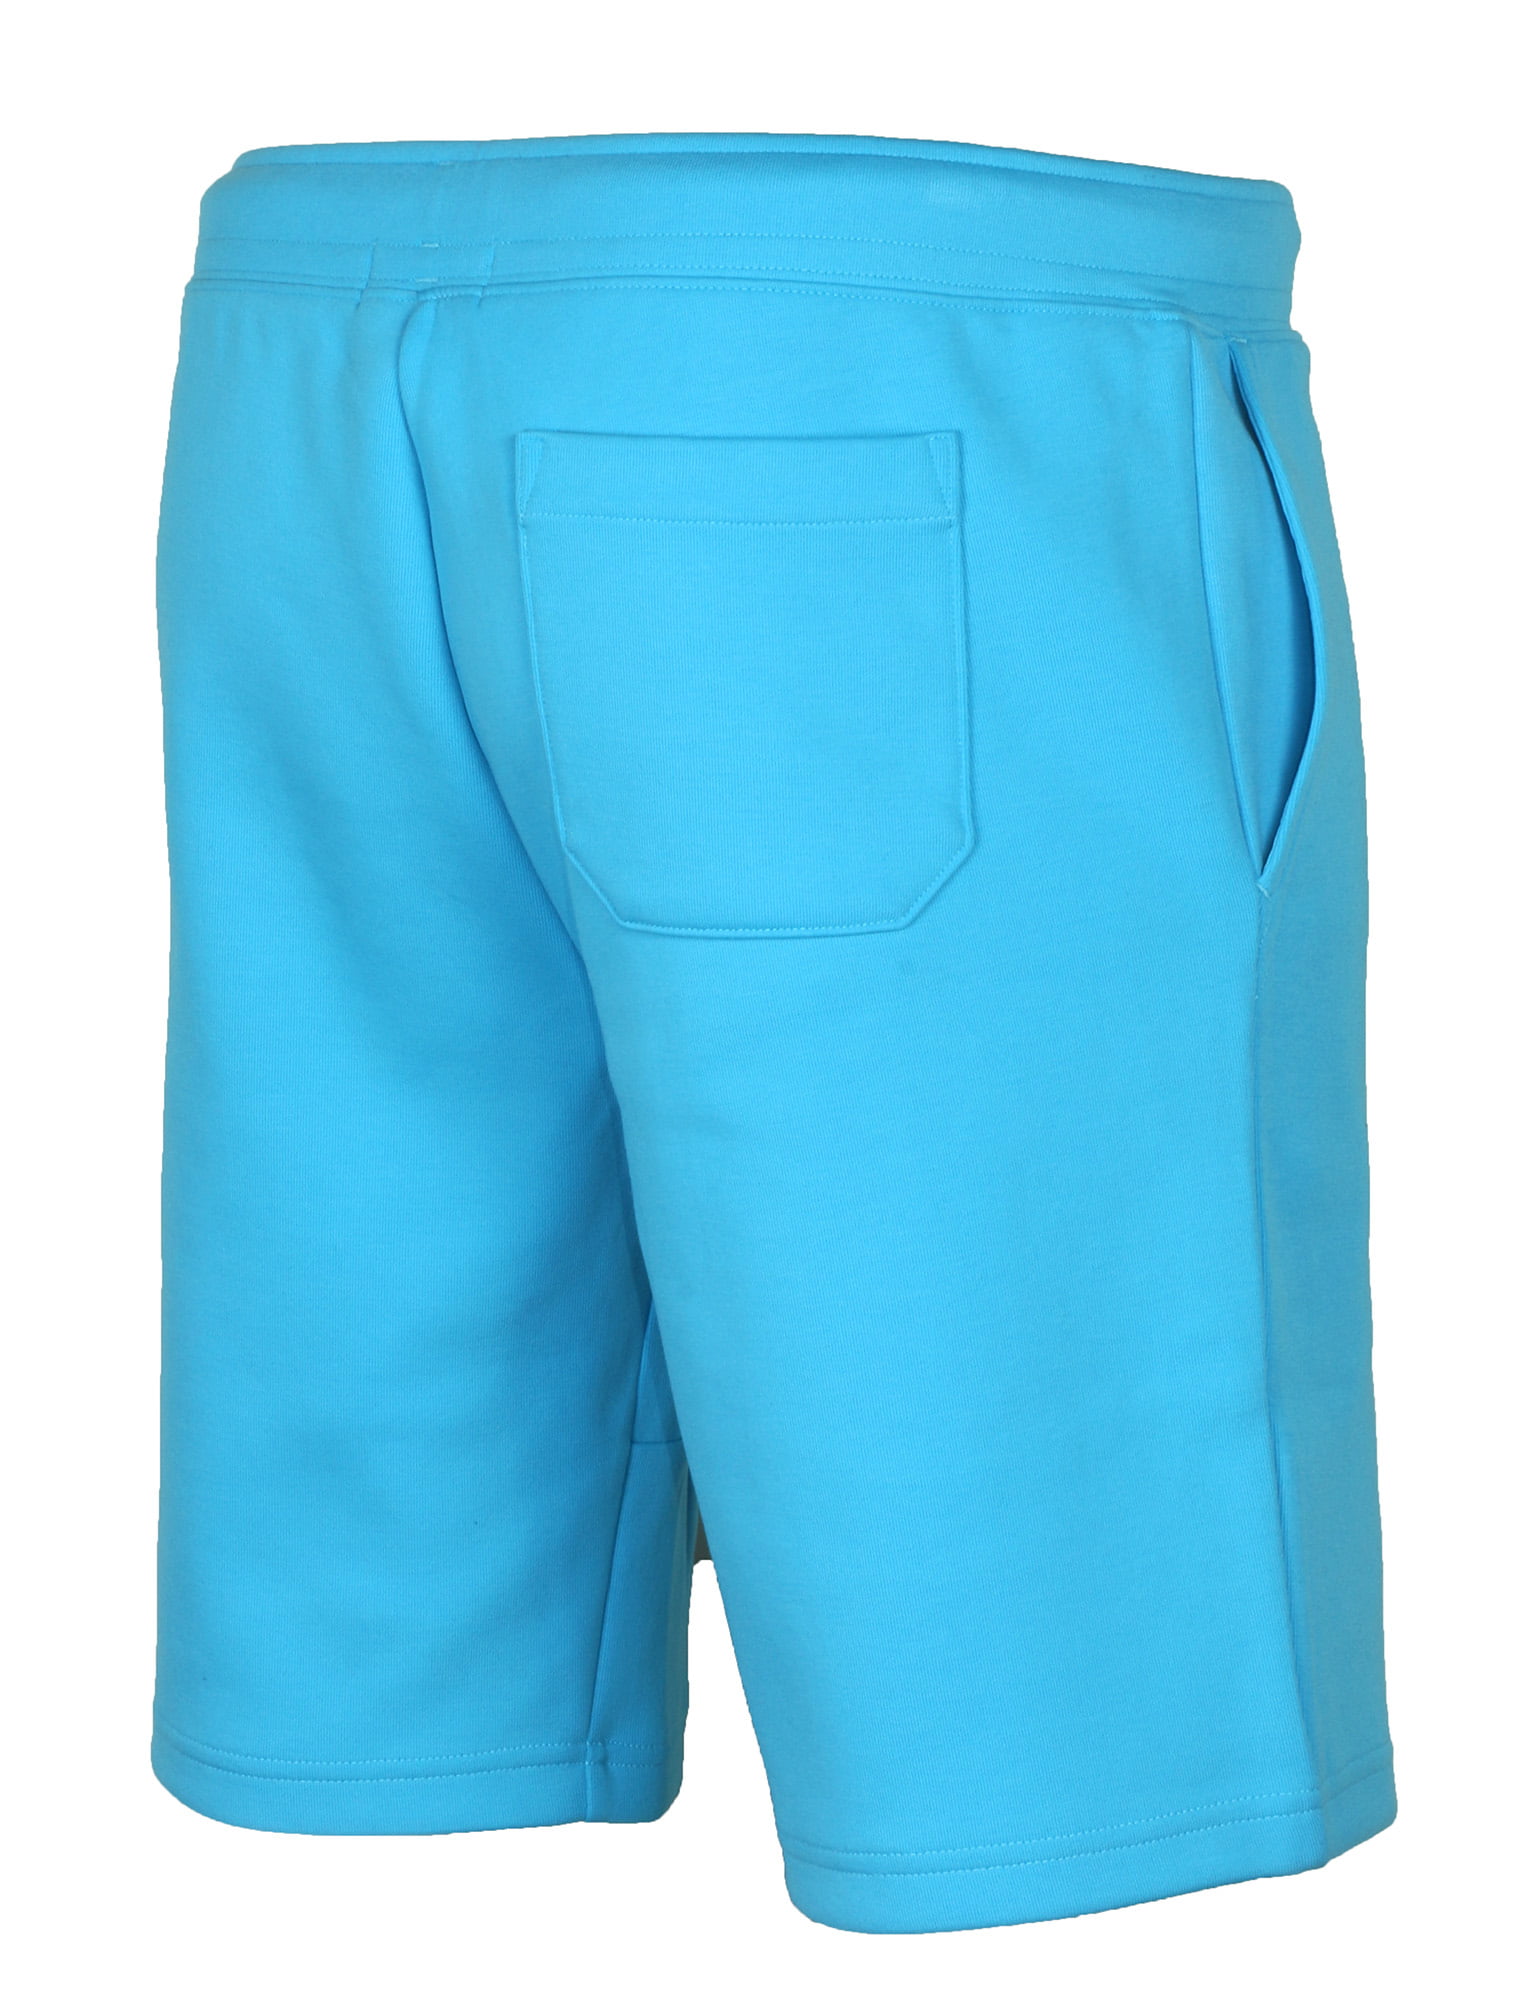 Polo RL Men's Double Knit Shorts (Blue, Medium) - Walmart.com